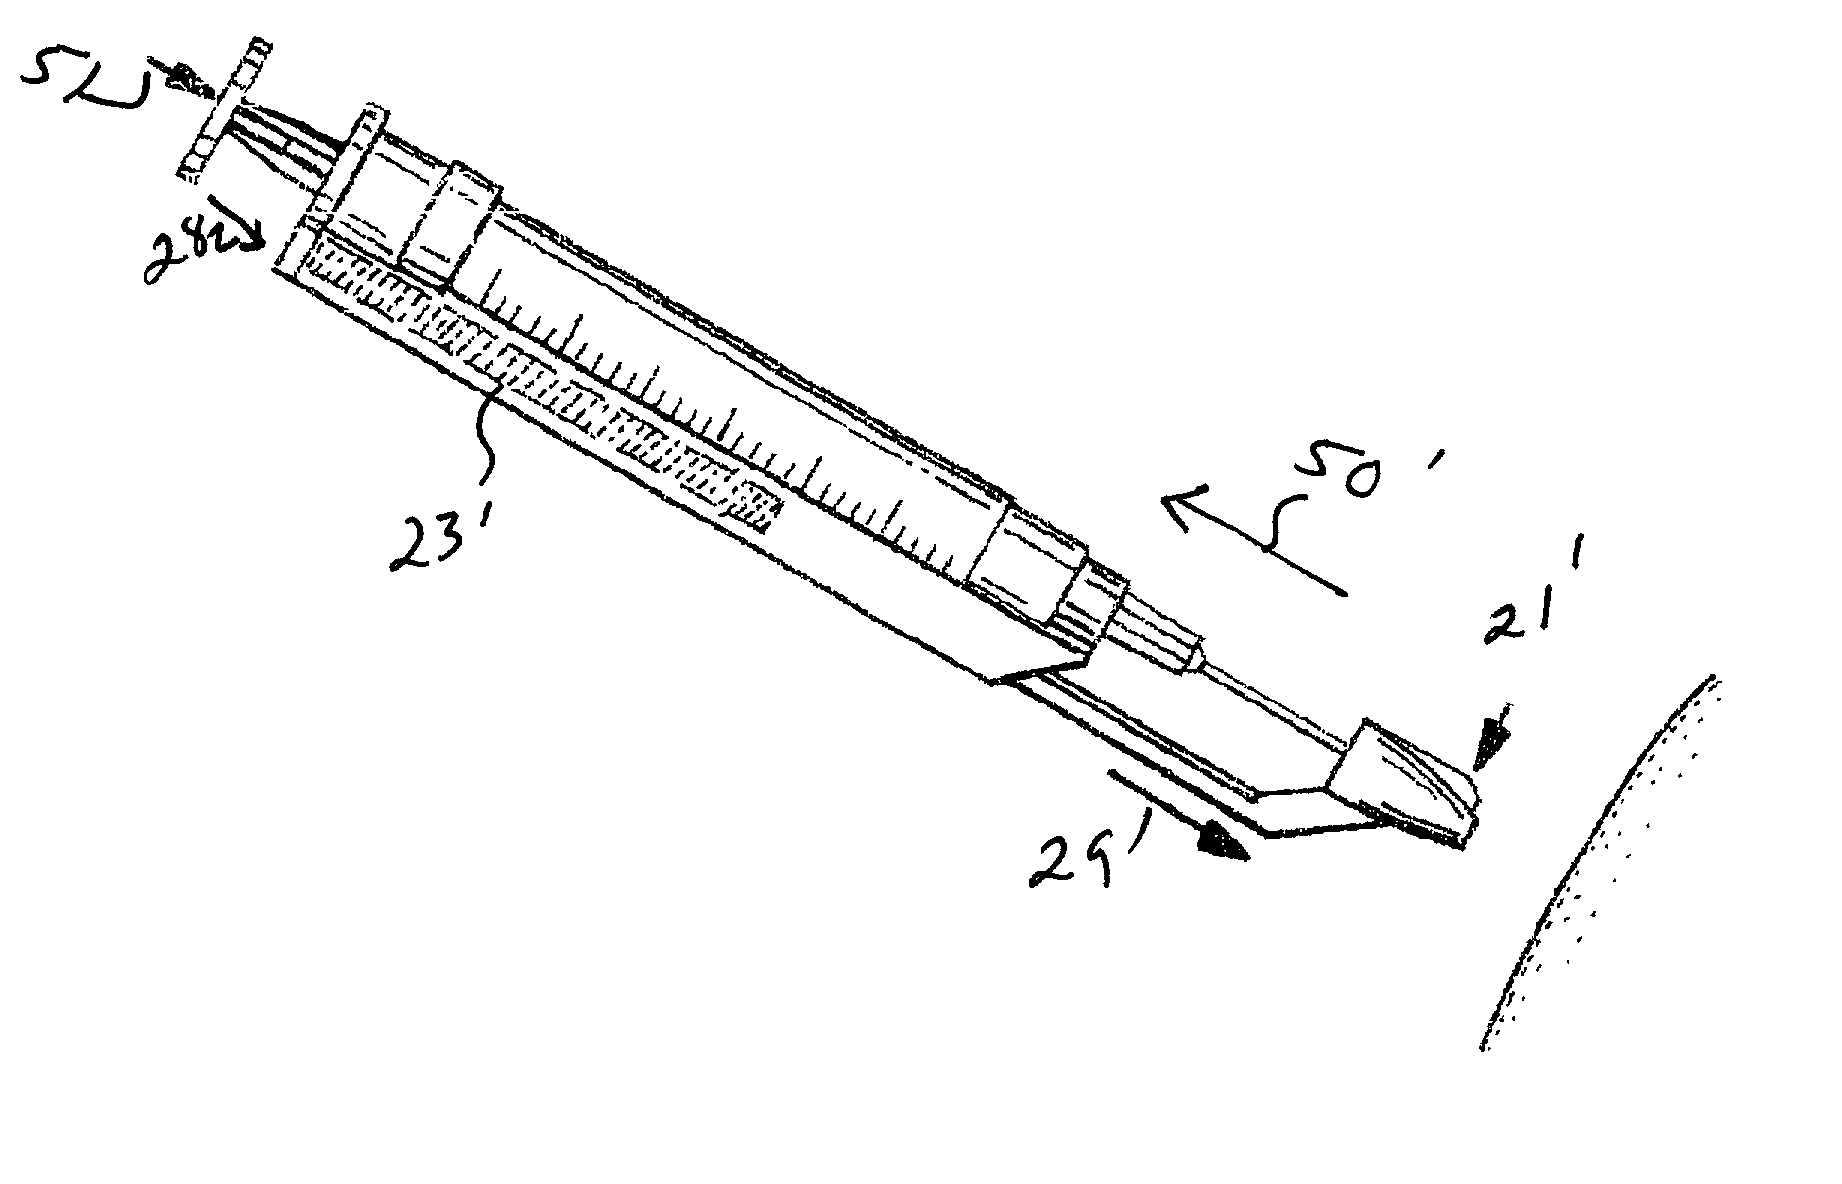 Safety syringe system